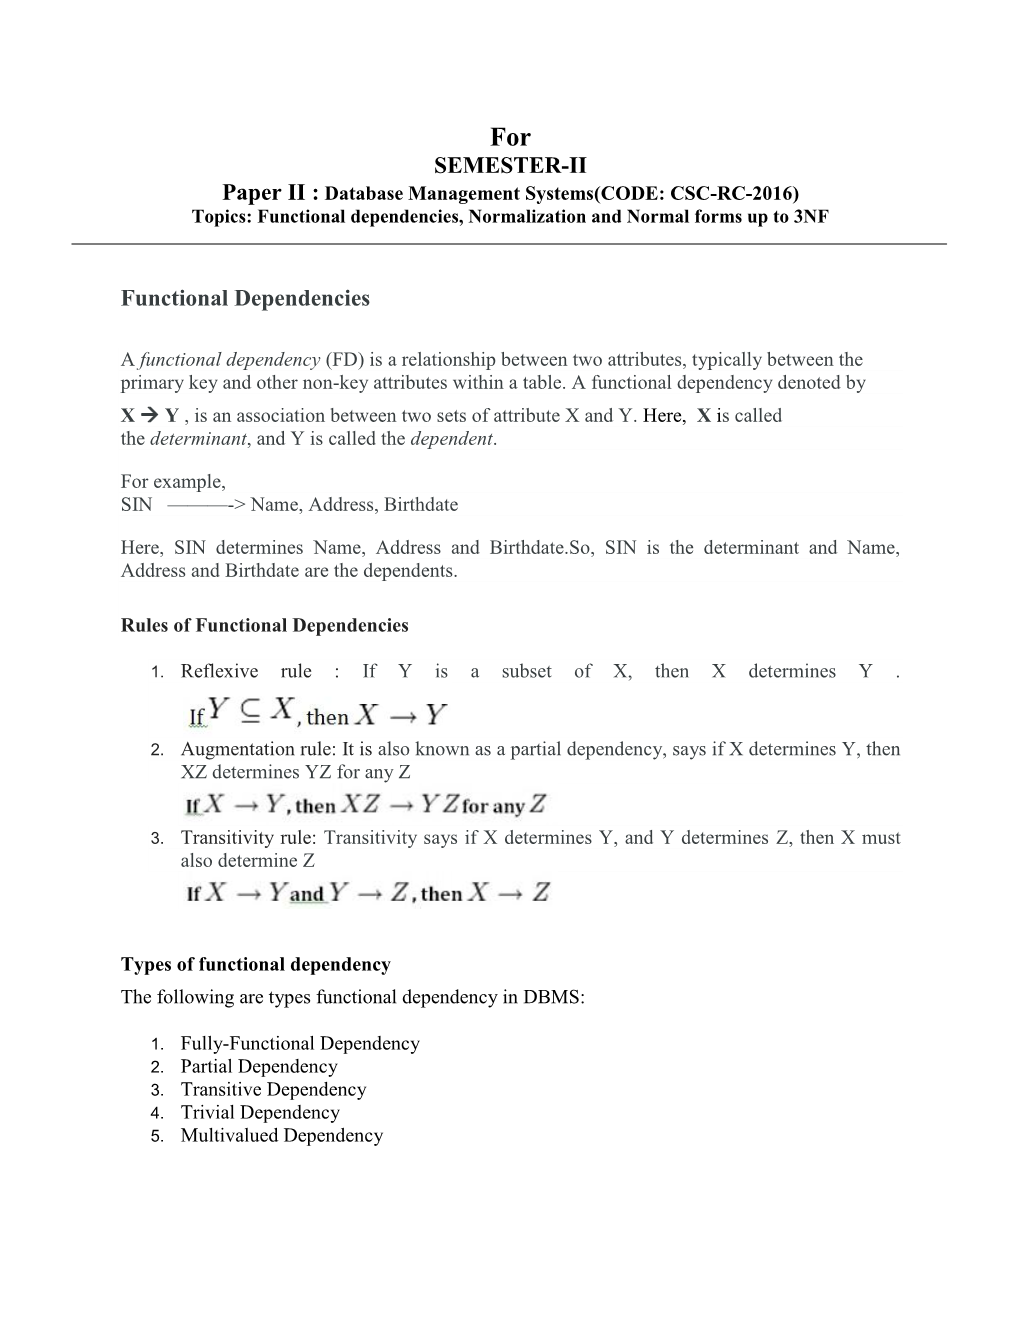 SEMESTER-II Functional Dependencies